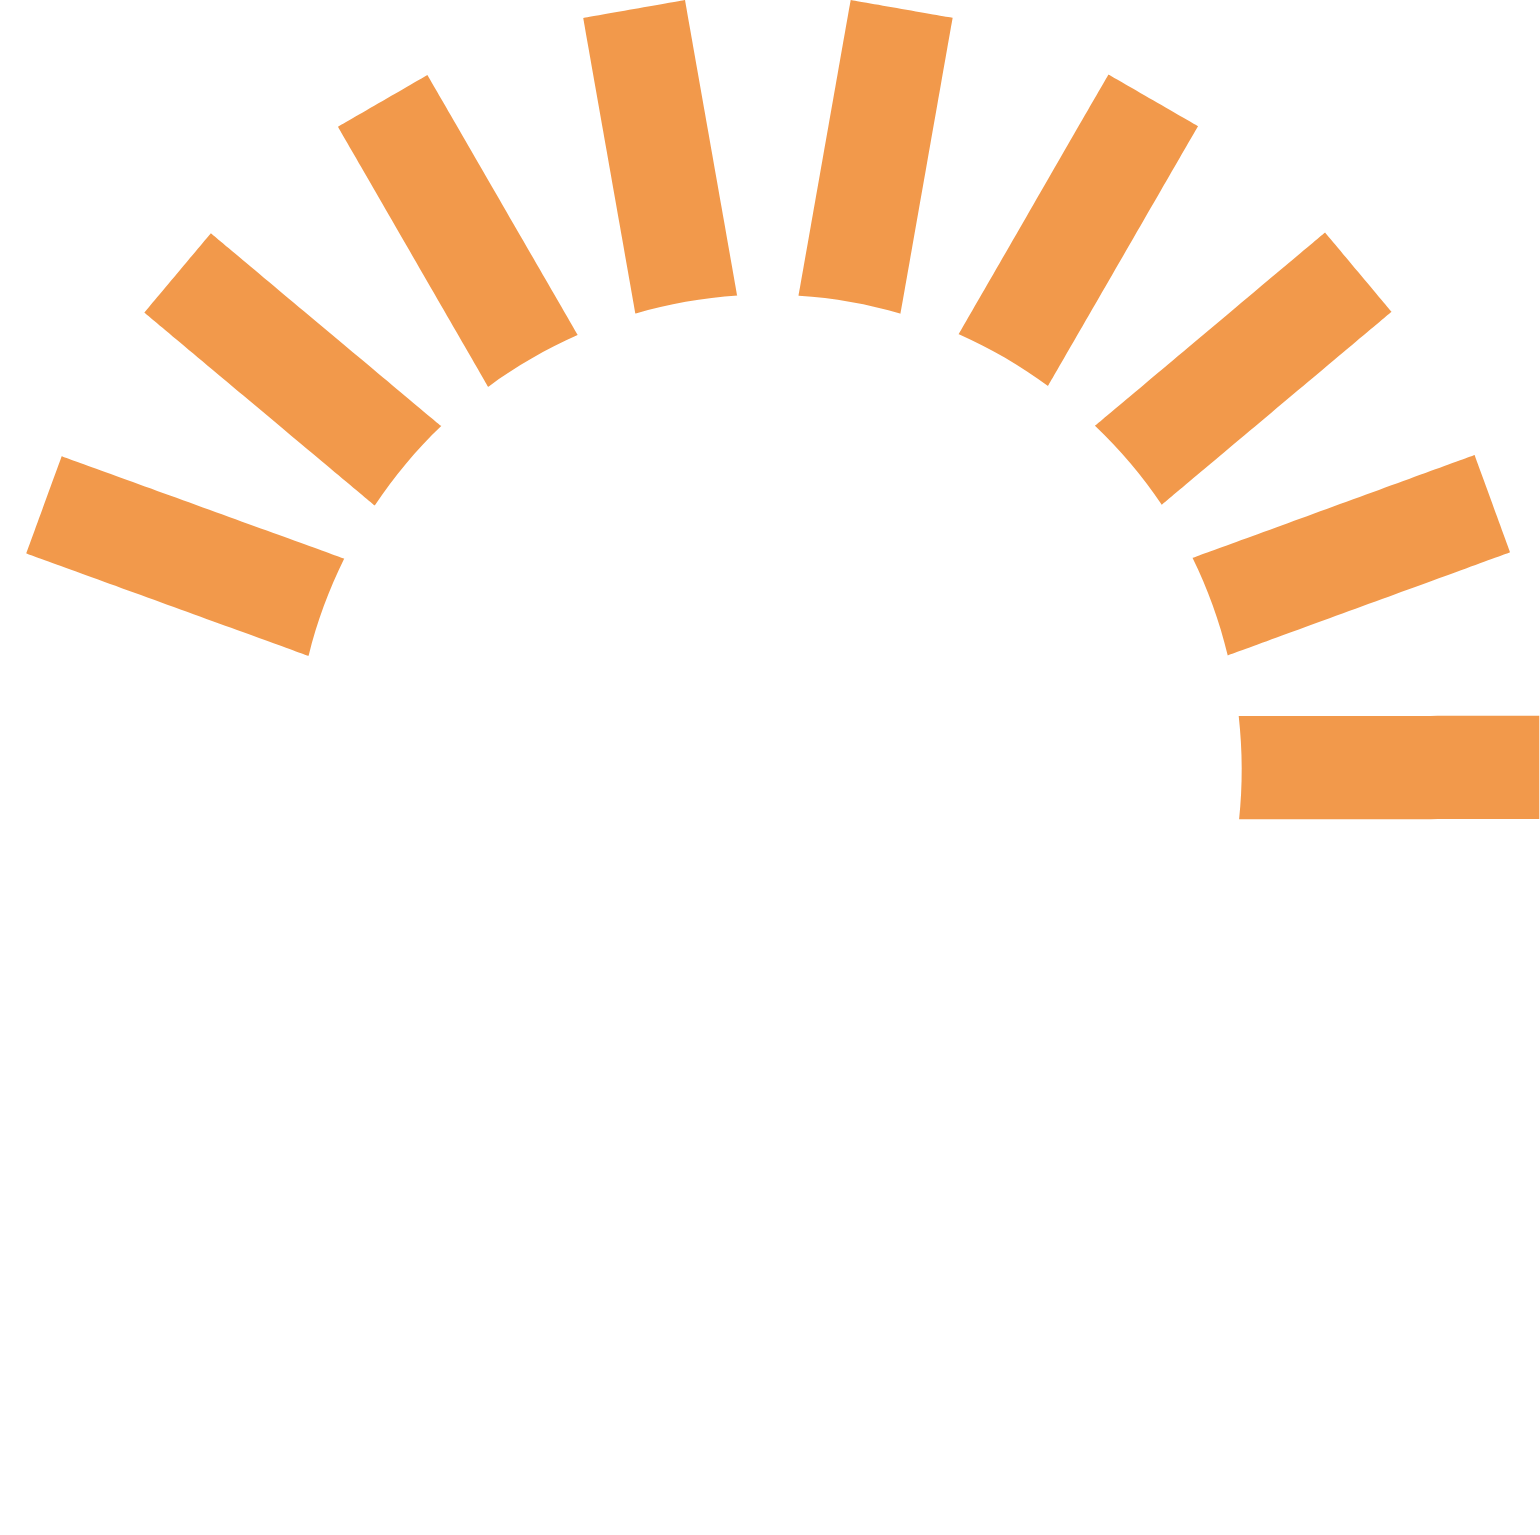 Boss Energy logo for dark backgrounds (transparent PNG)